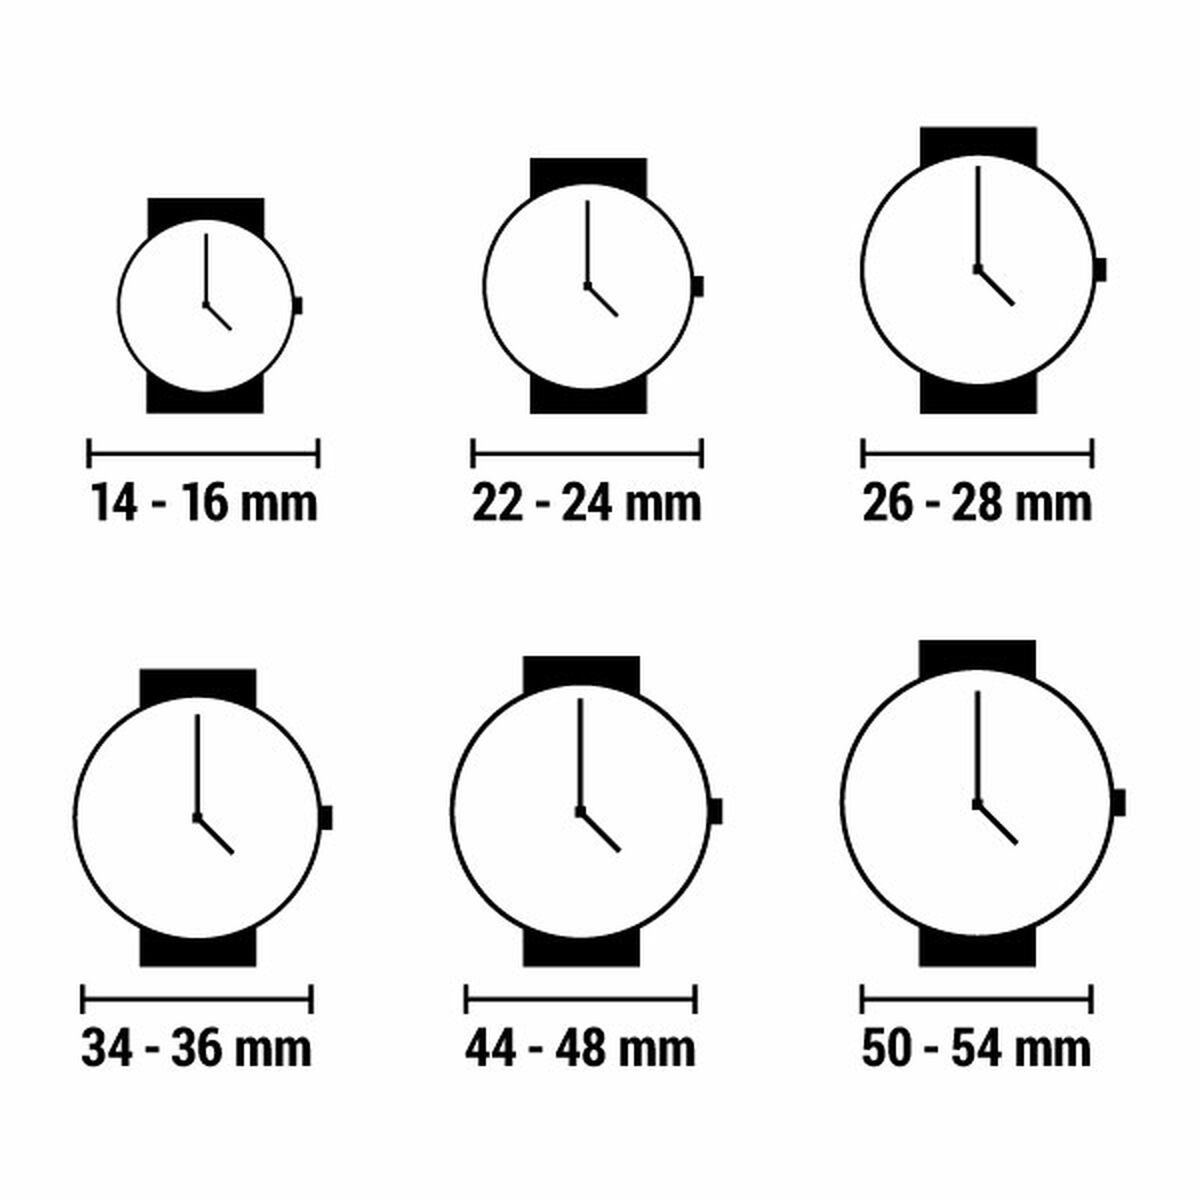 Horloge Dames Calvin Klein MINIMAL (Ø 35 mm)